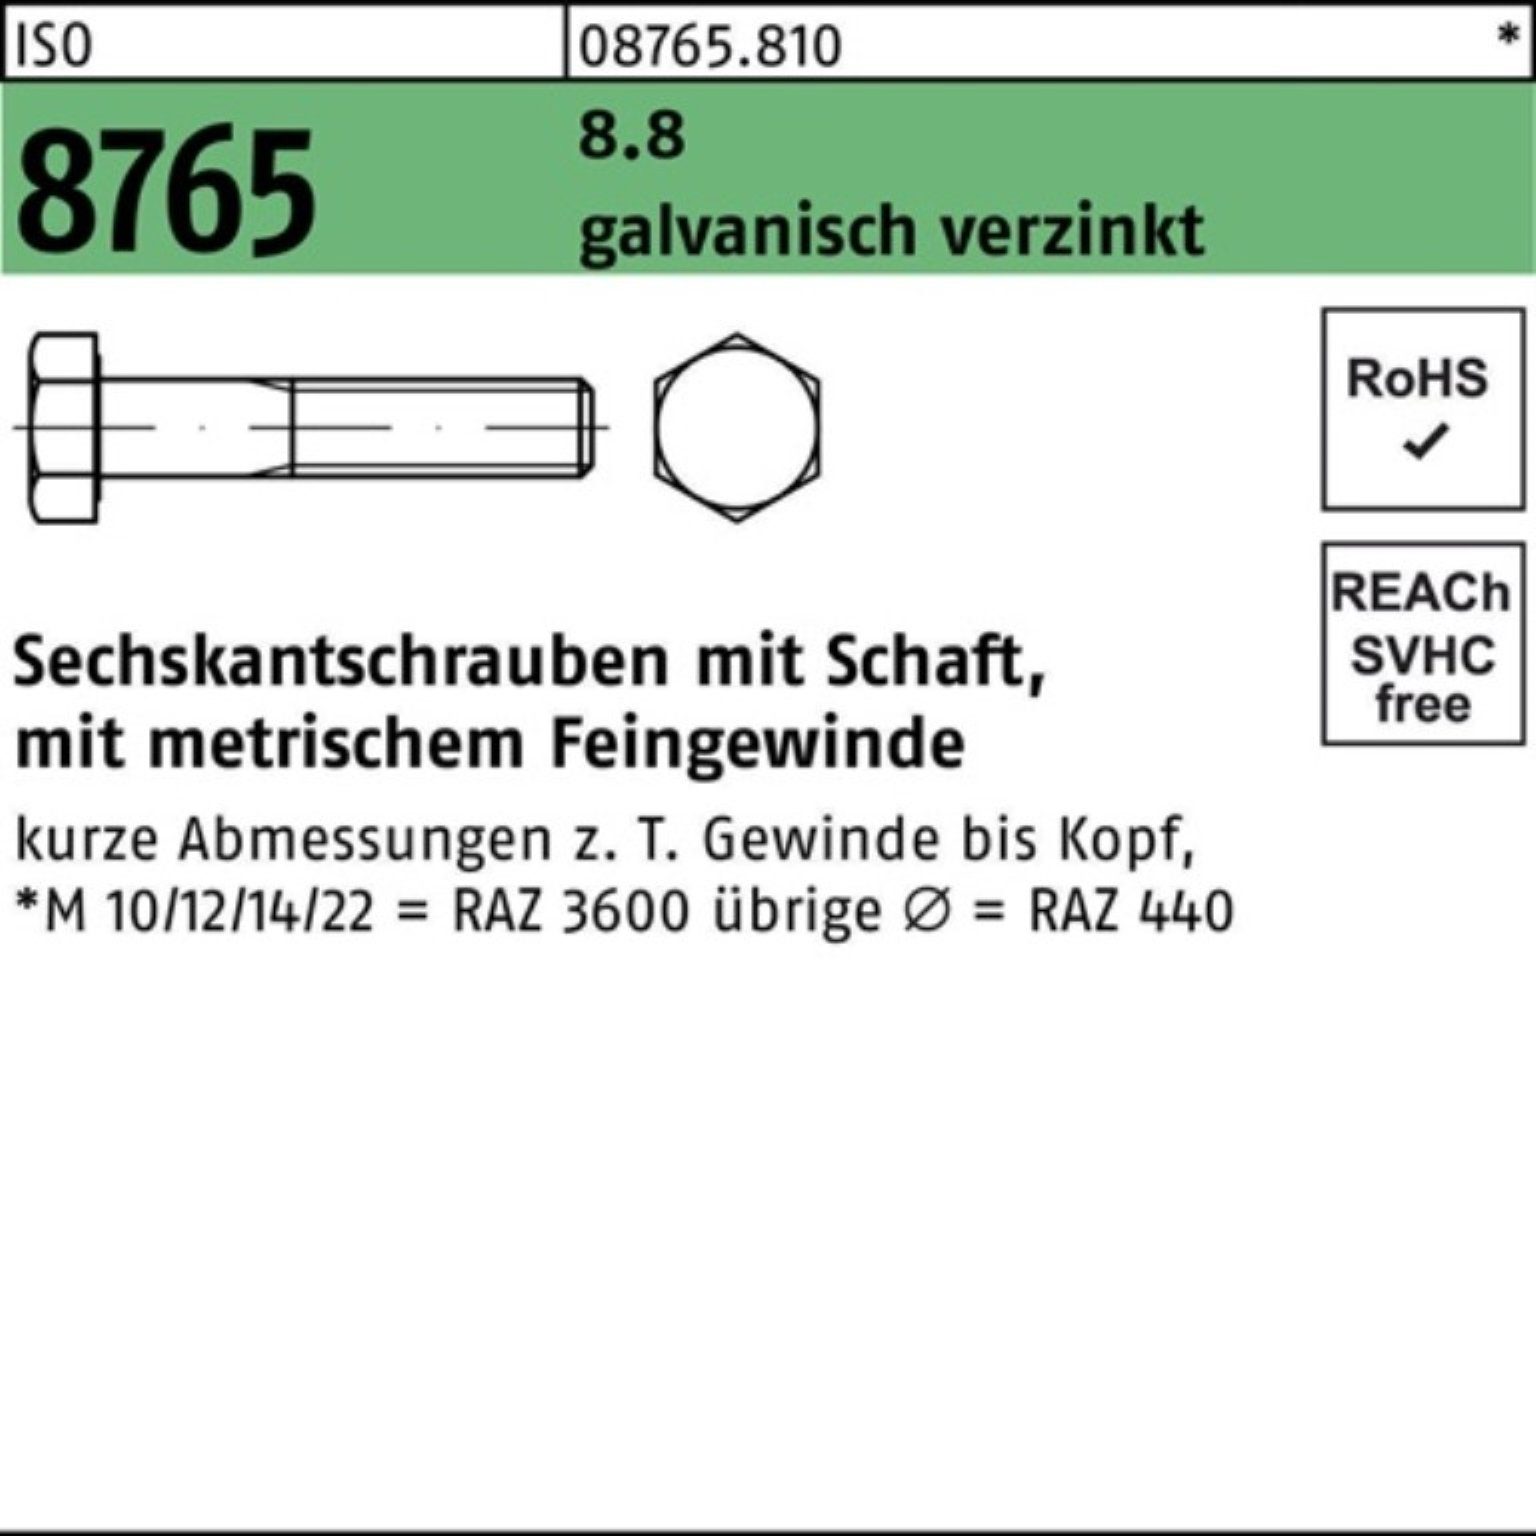 Sechskantschraube Sechskantschraube galv.ver Pack 8765 M12x1,25x 50 Schaft 8.8 ISO Reyher 100er